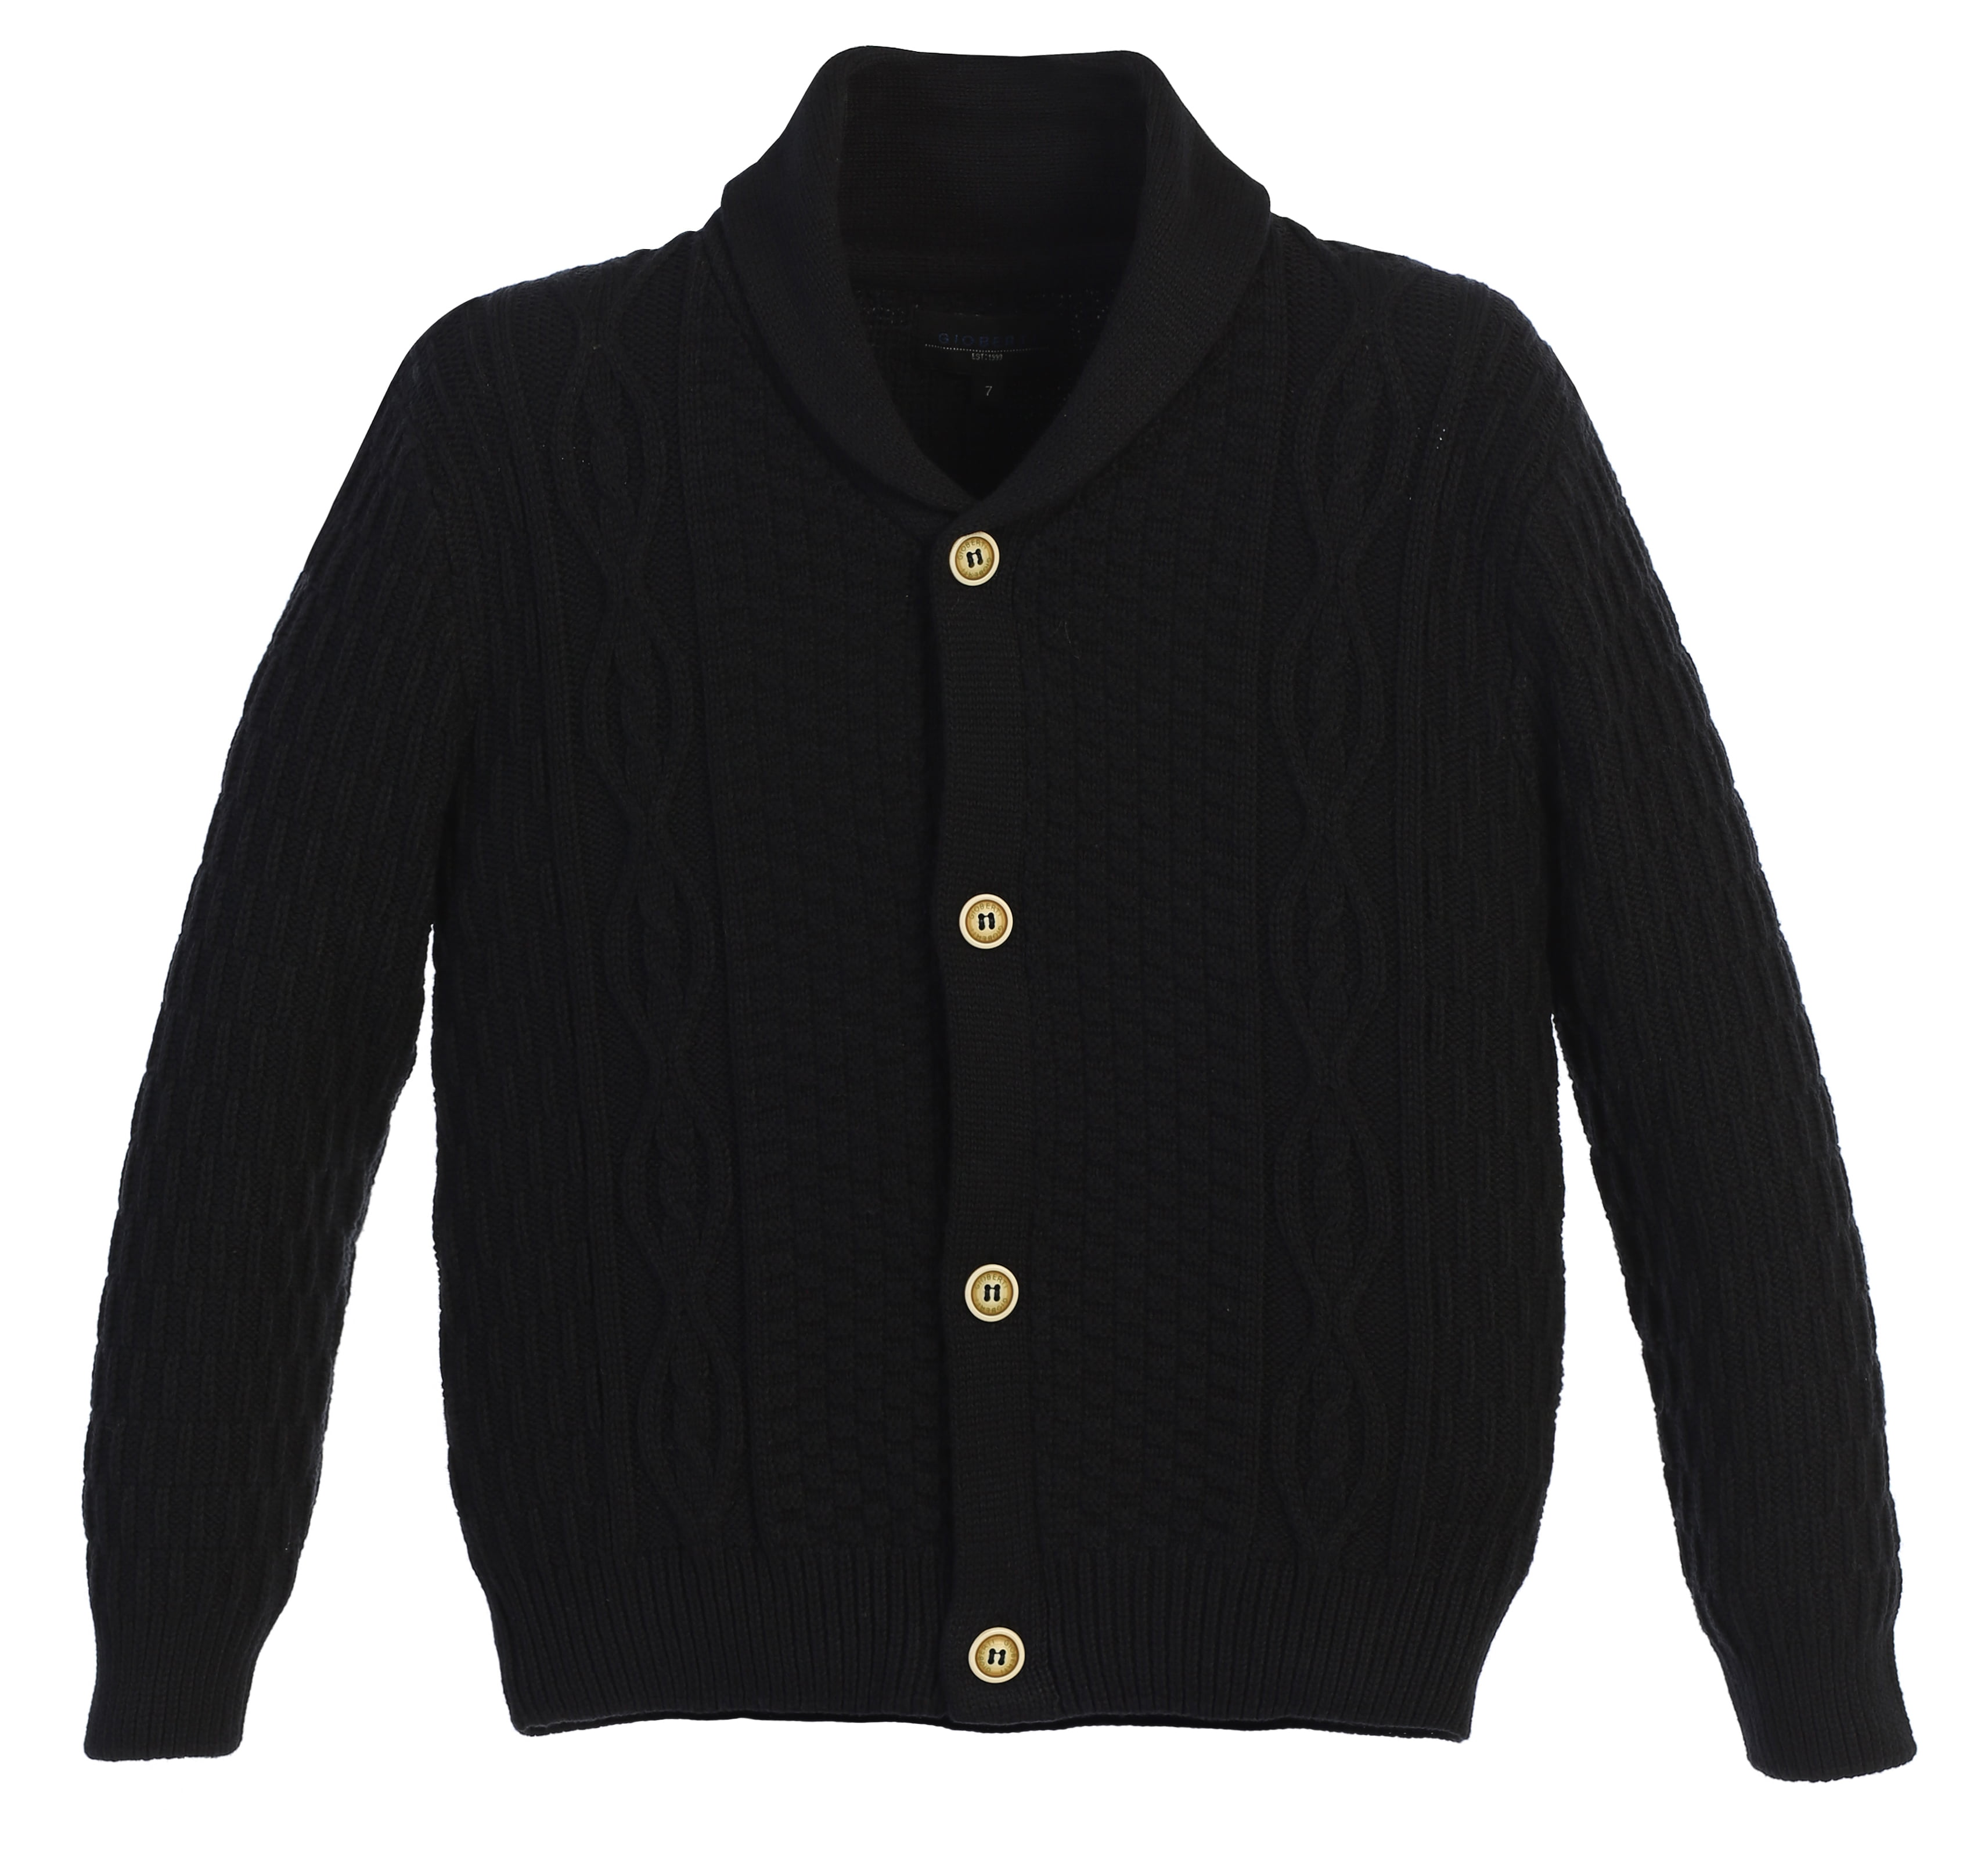 Gioberti Boys Knitted Full Zip 100% Cotton Cardigan Sweater